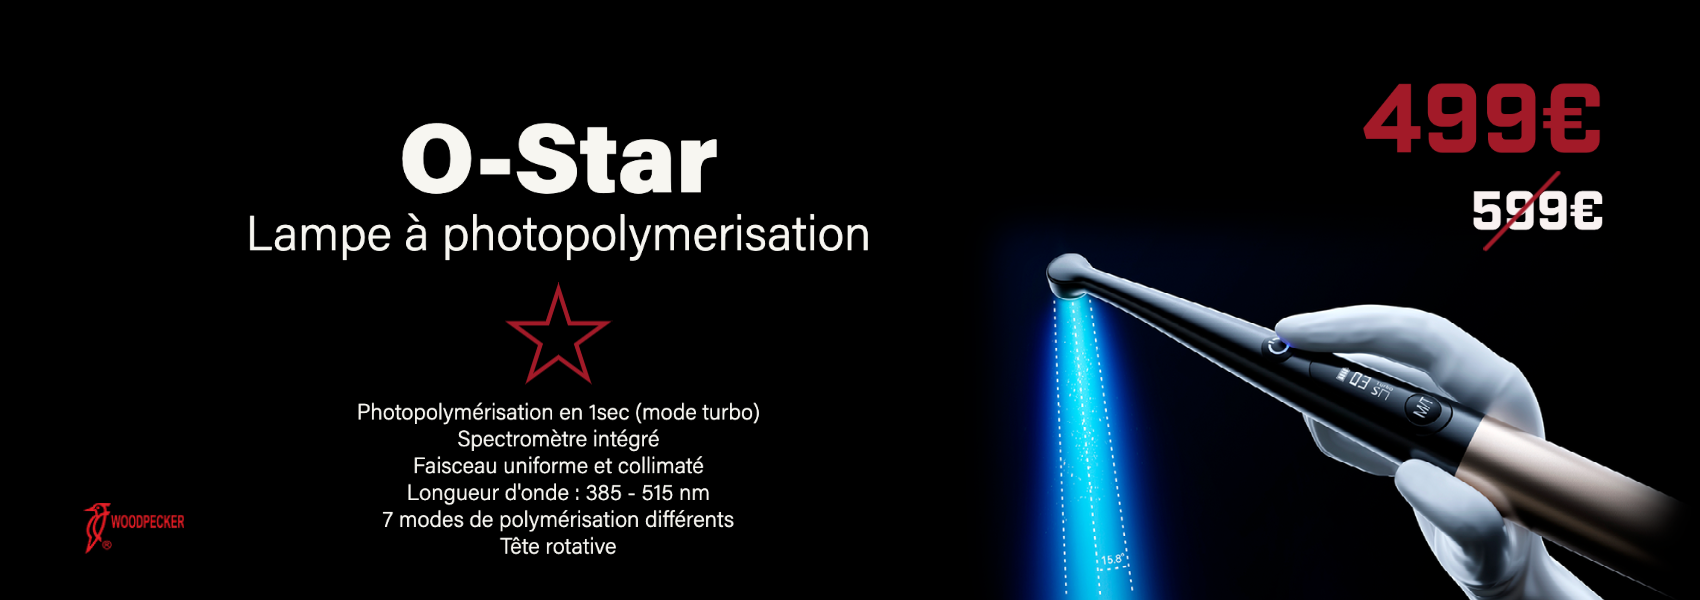 lampe-ostar-photopolymérisation-woodpecker-france-materiel-dentaire